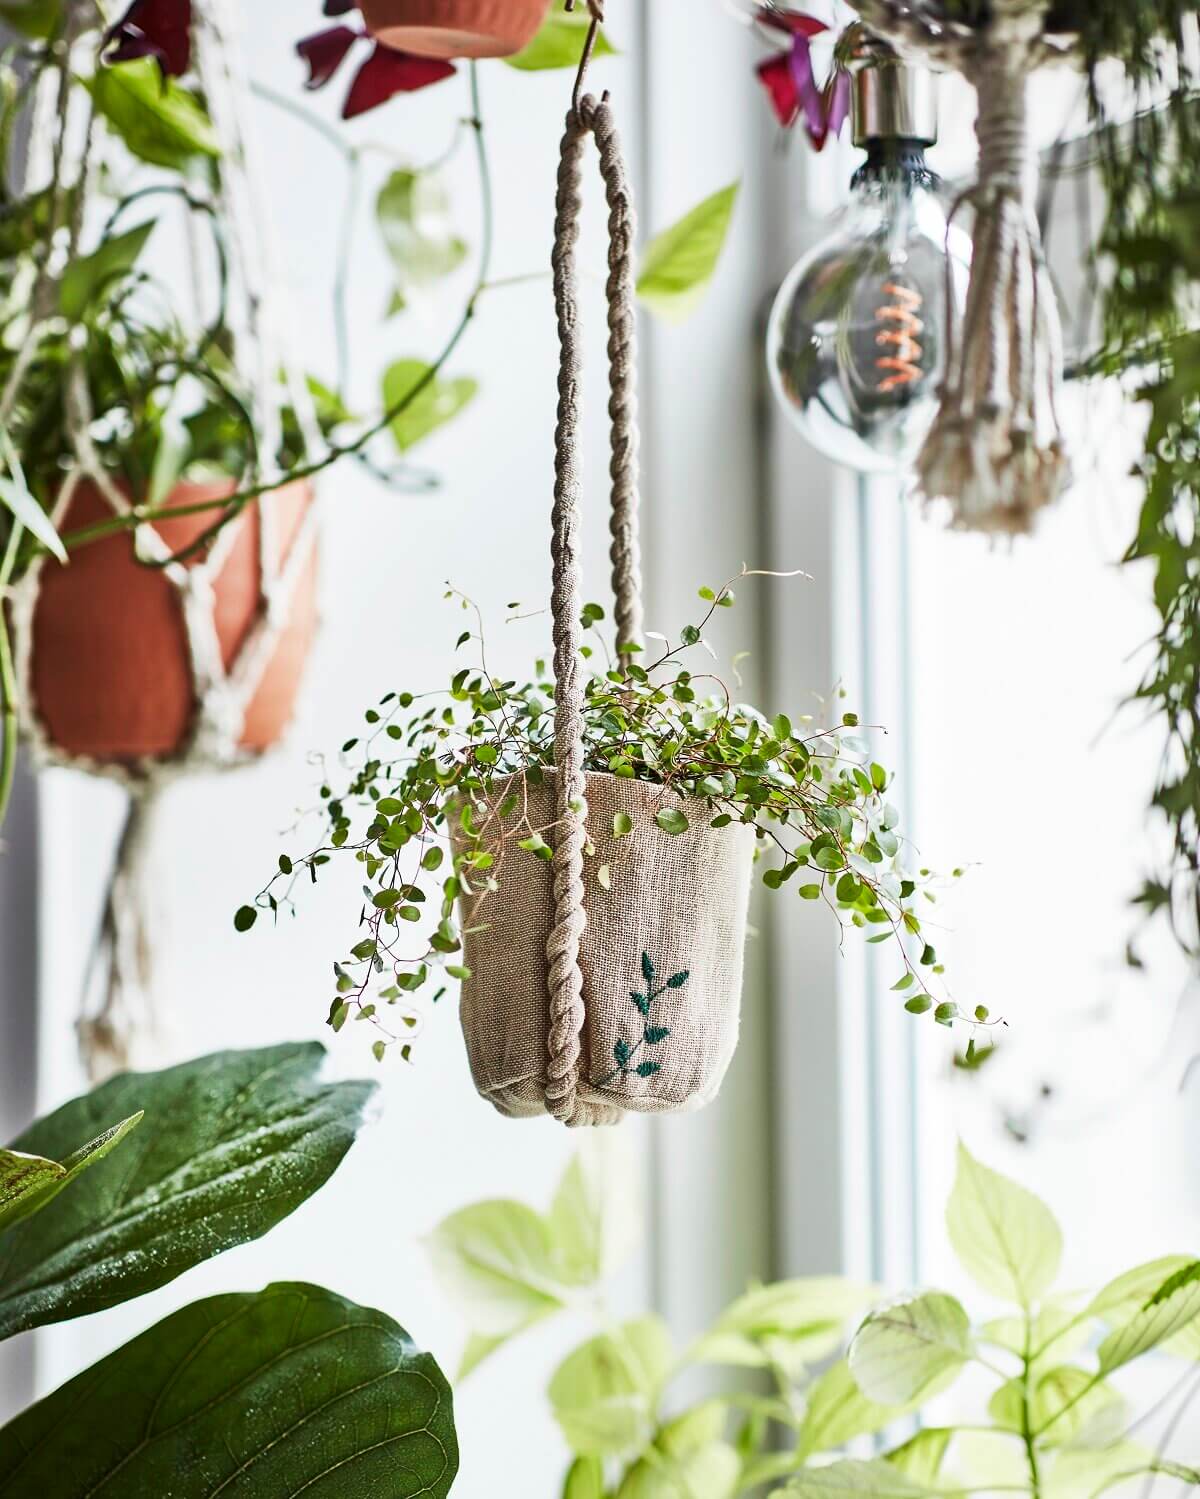 ikea botanisk collection nordroom5 Botanisk: A Handmade Indoor Gardening Collection by IKEA